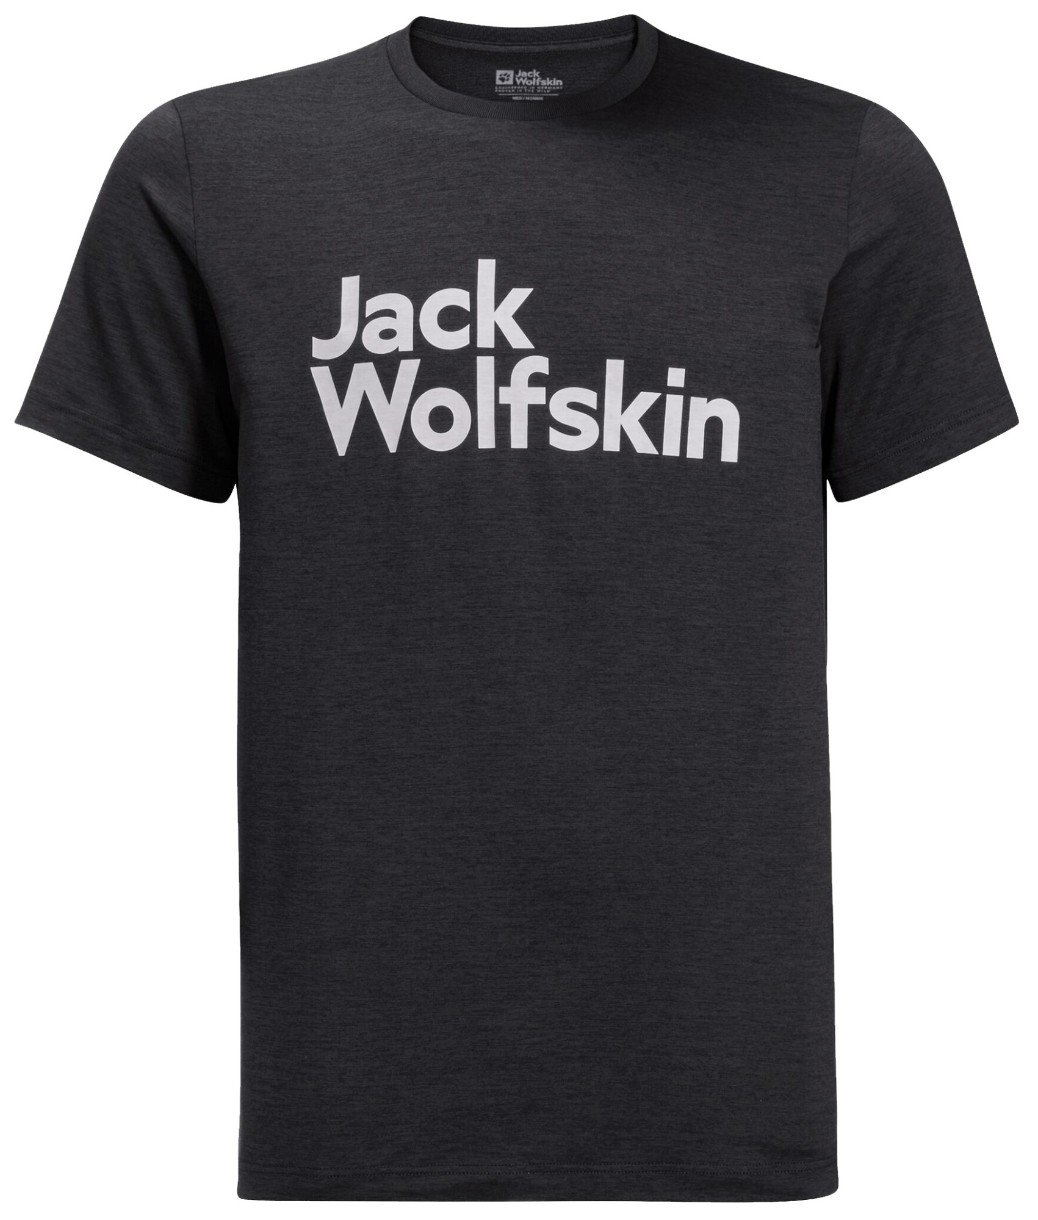 Tricou bărbătesc Jack Wolfskin Brand T M Black XXL